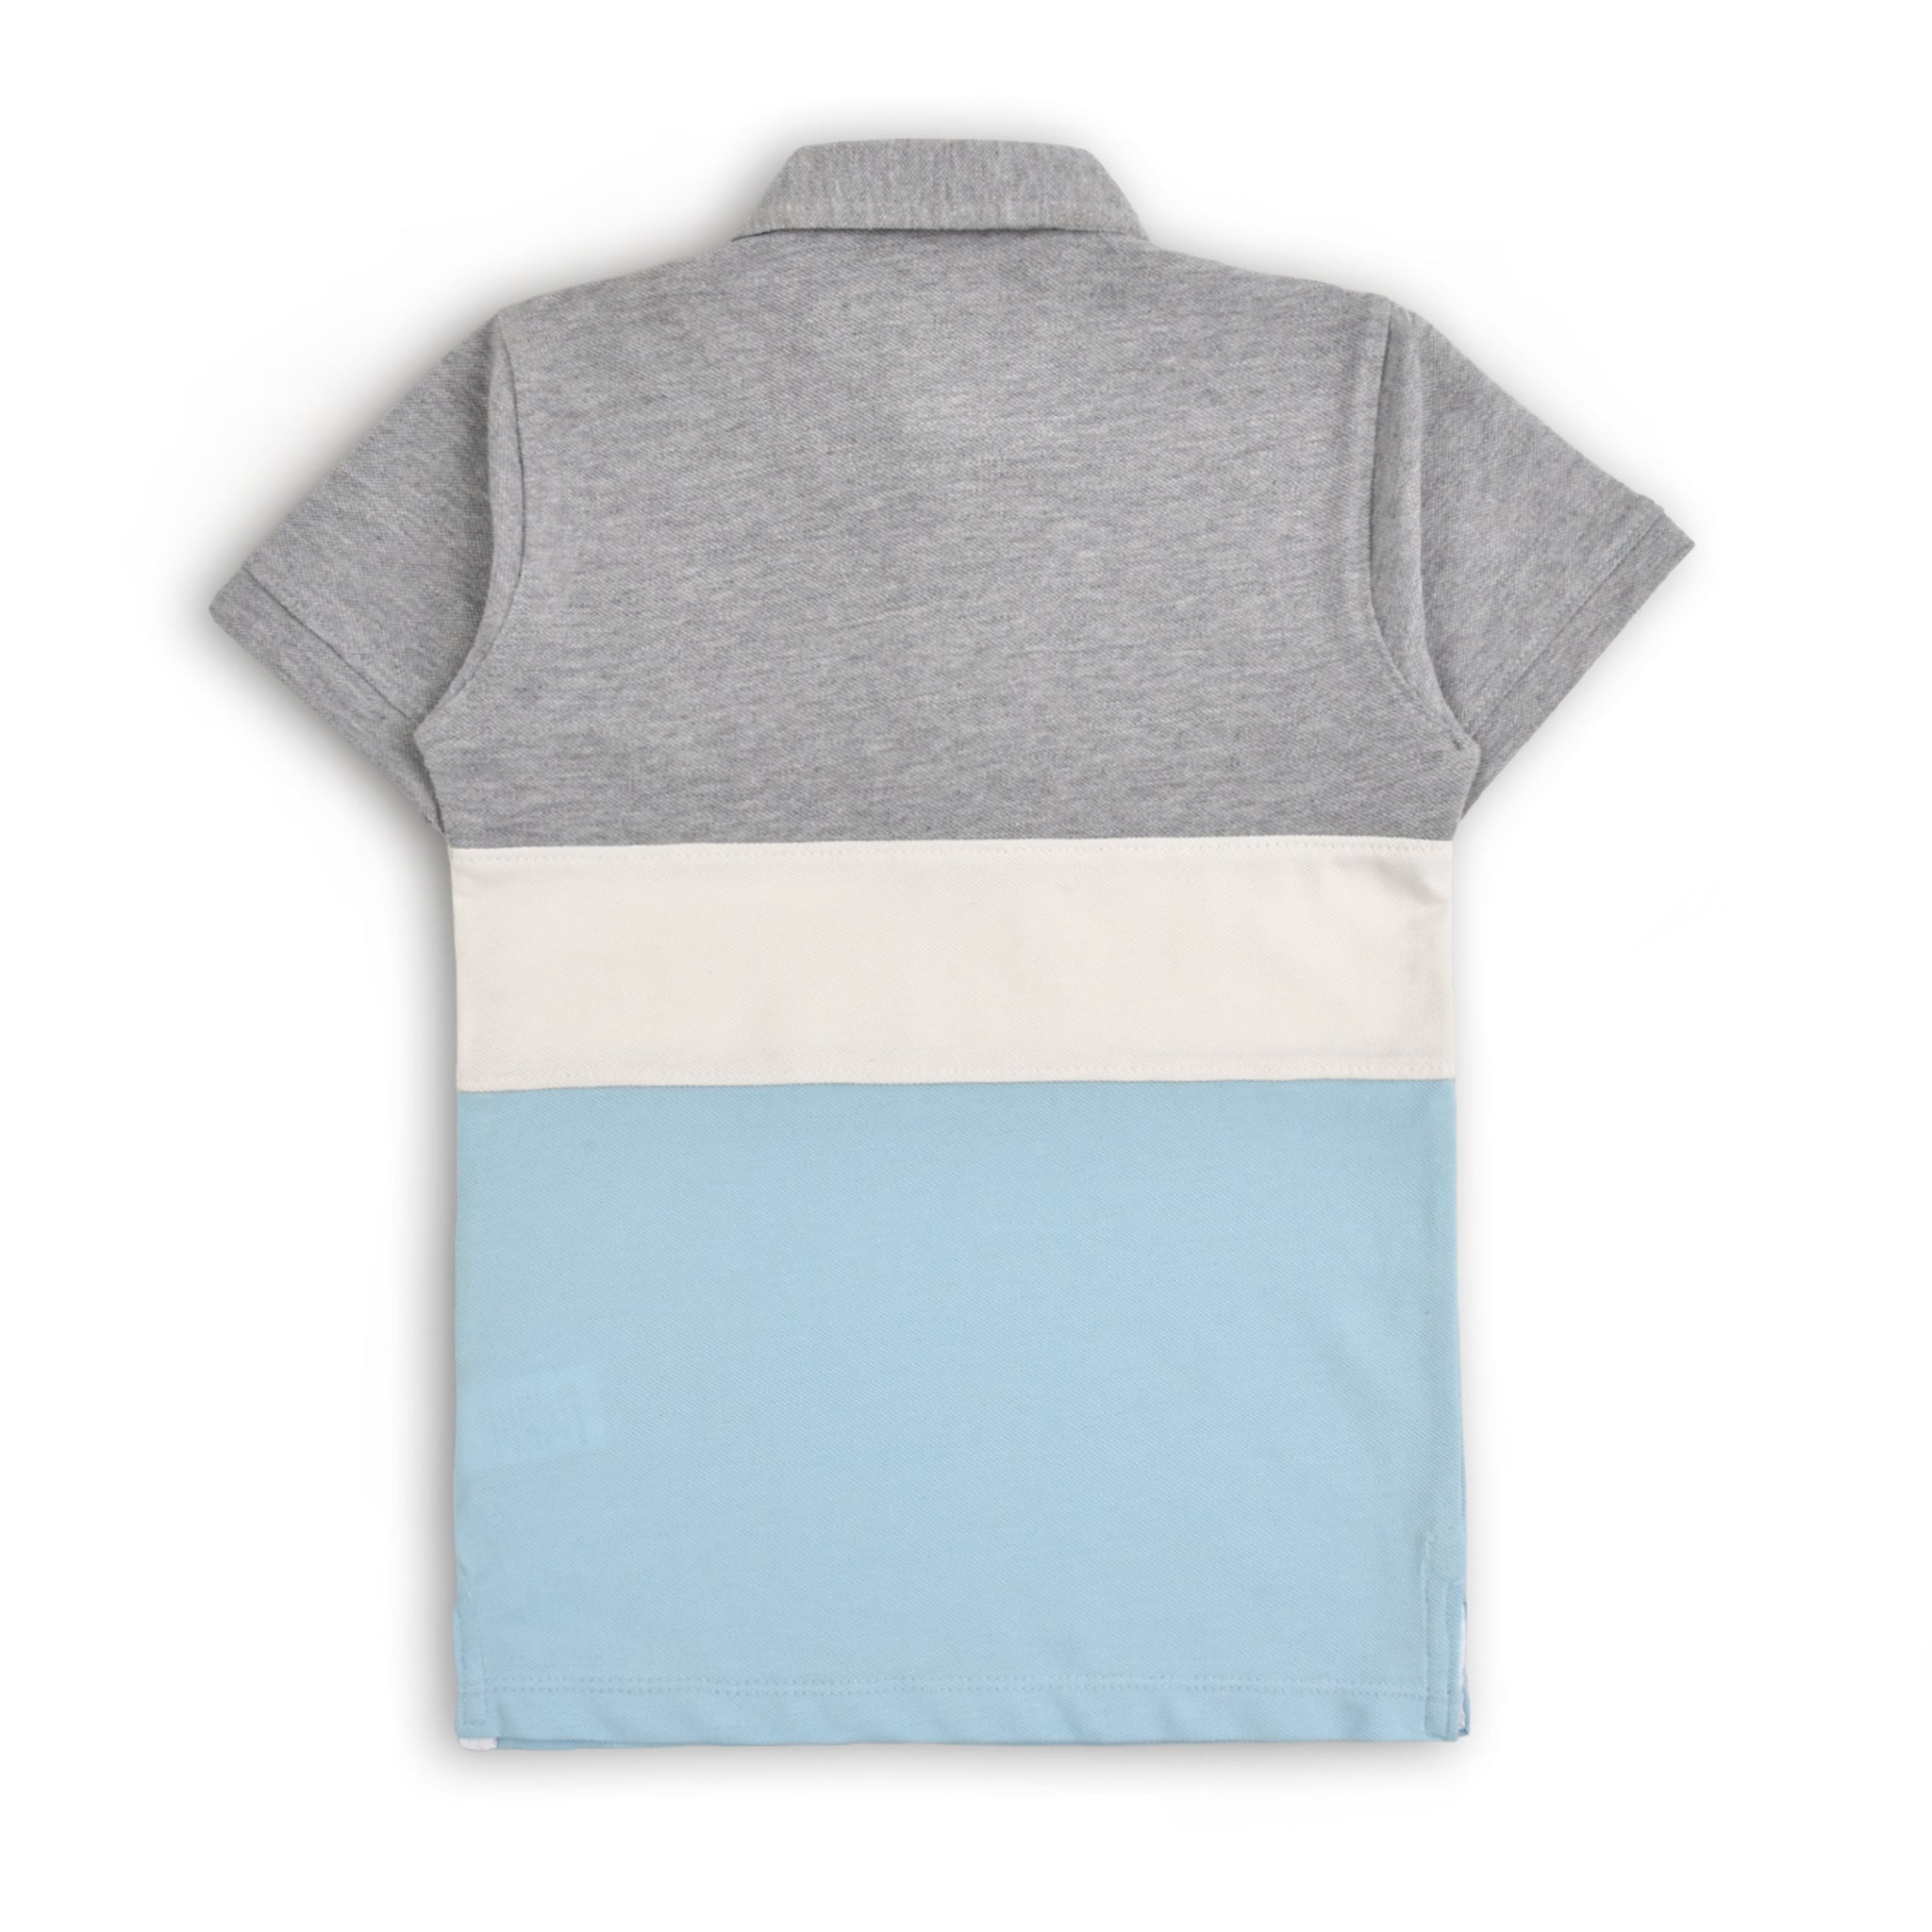 Sky & Grey Polo Shirt